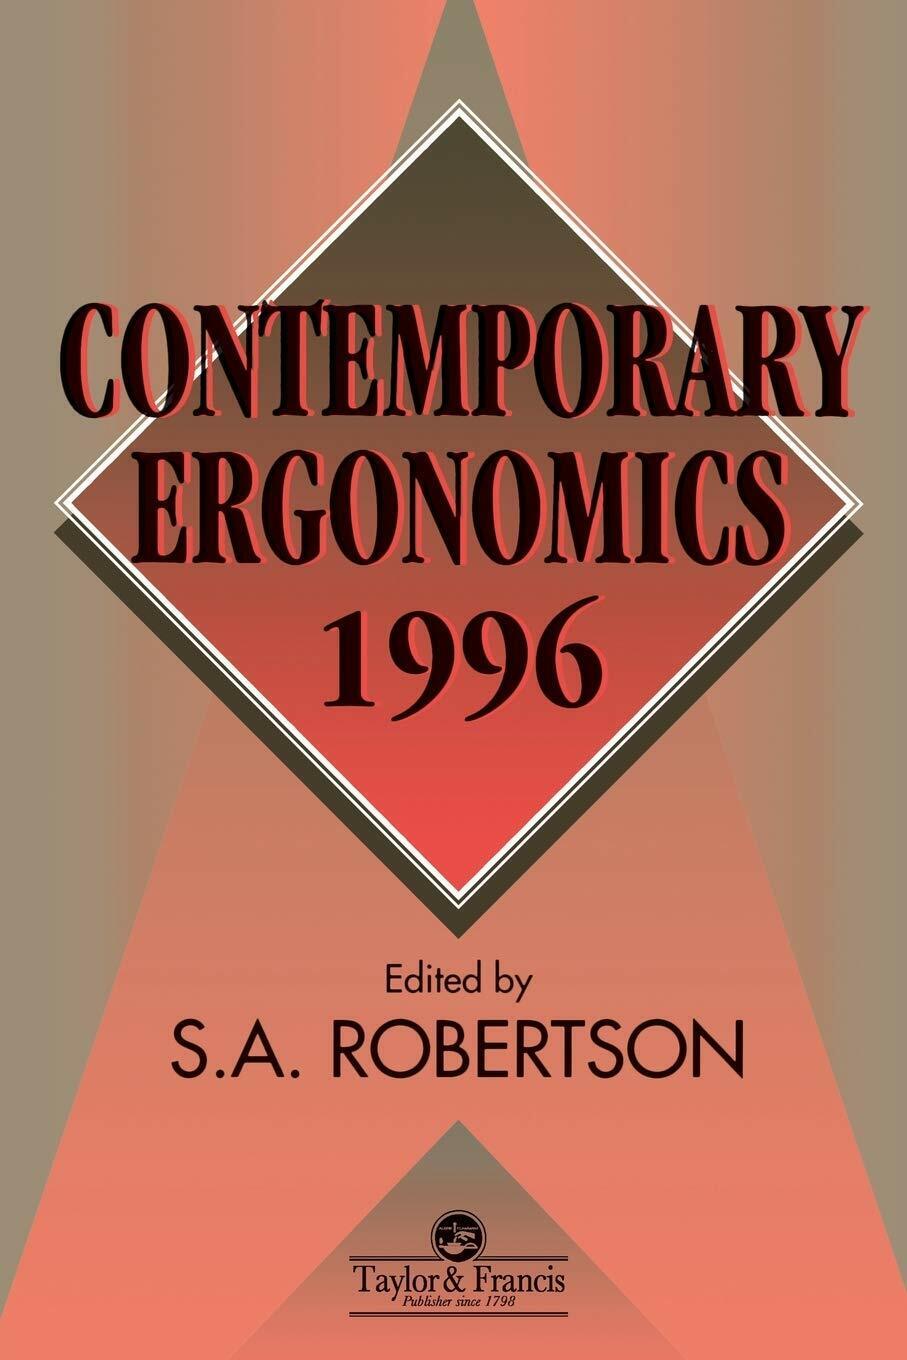 Contemporary Ergonomics -  S. Robertson - Crc Press, 1996